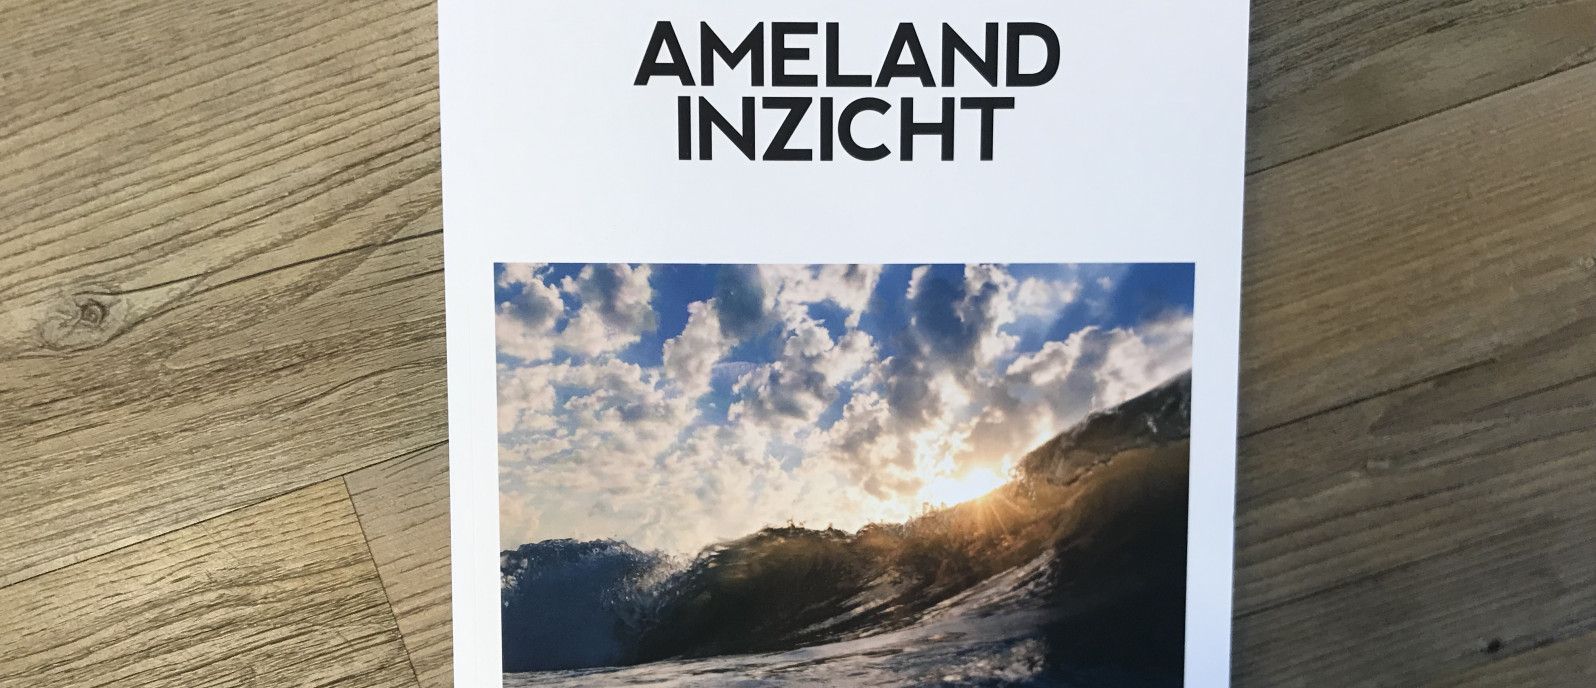 Ameland InZicht - webshop VVV Ameland